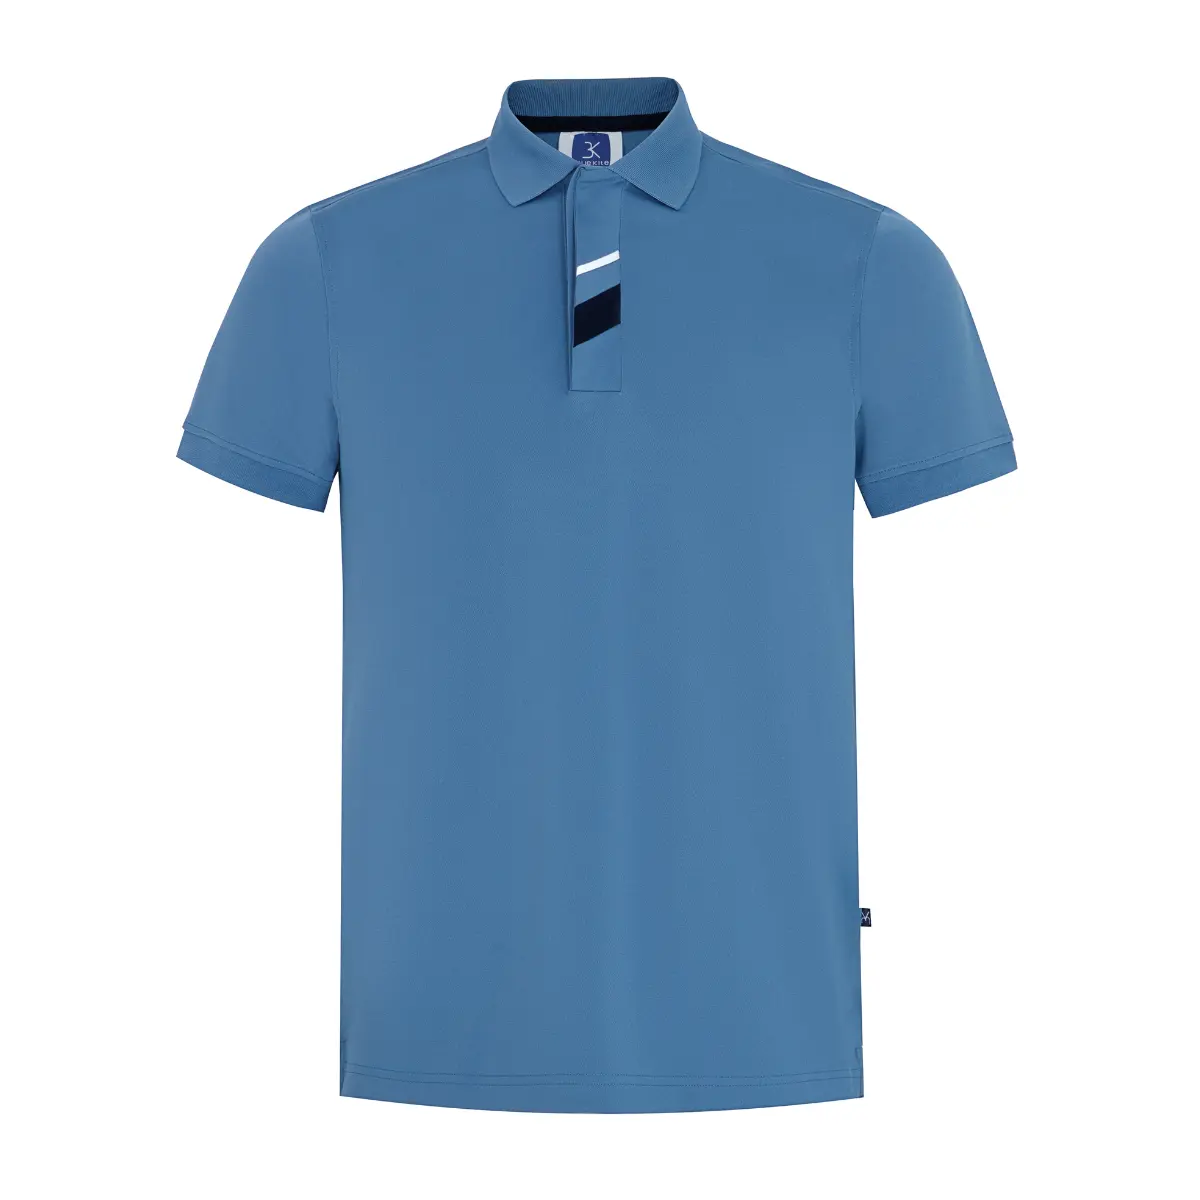 Uniform Polo Shirt Good Price Polo Shirt Work Uniform Unisex Tan Pham Gia Premium Polo Shirts Vietnam Manufacturer